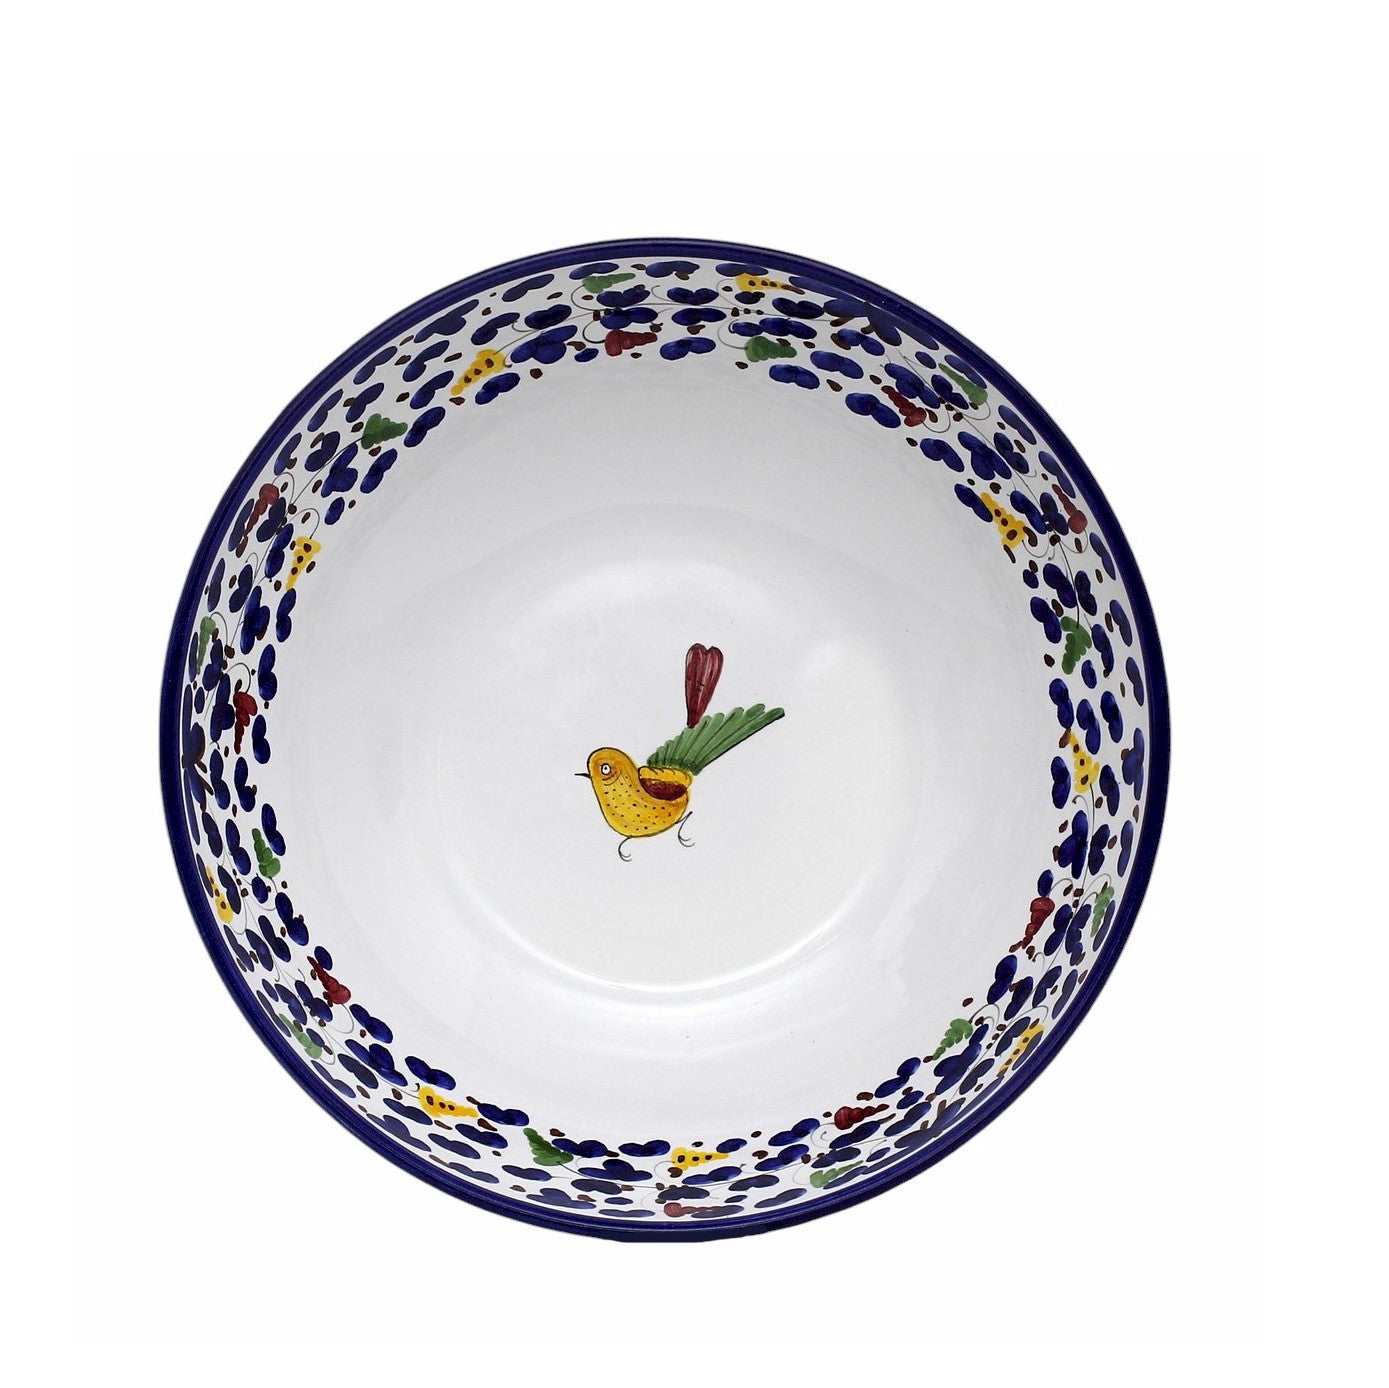 ARABESCO BLUE DERUTA: Coupe Salad/Pasta Bowl